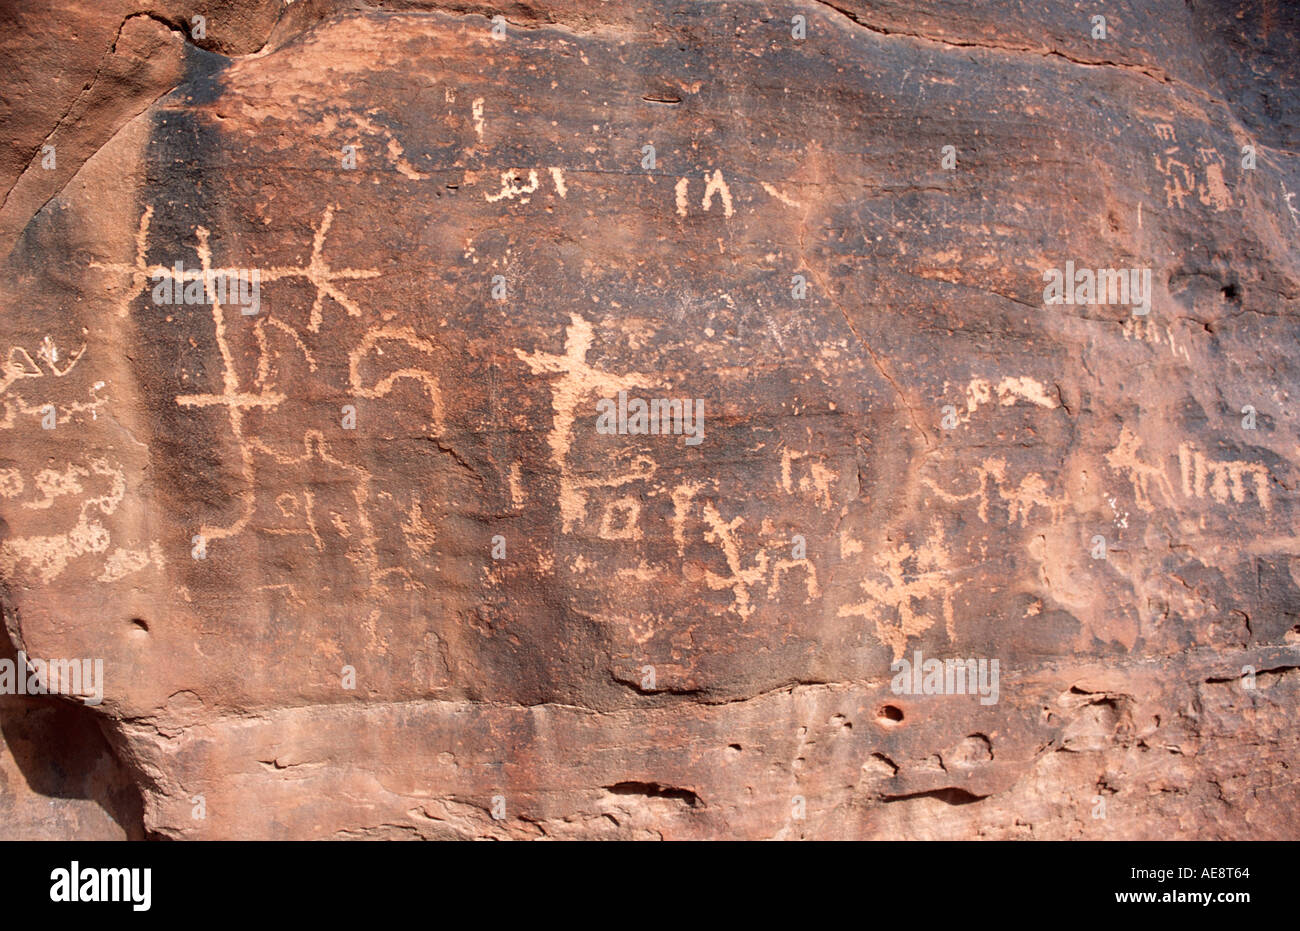 Ancient Nabataean petroglyphic inscriptions on sandstone rocks near Lawrence of Arabia s Spring Wadi Rum Jordan Middle East Stock Photo